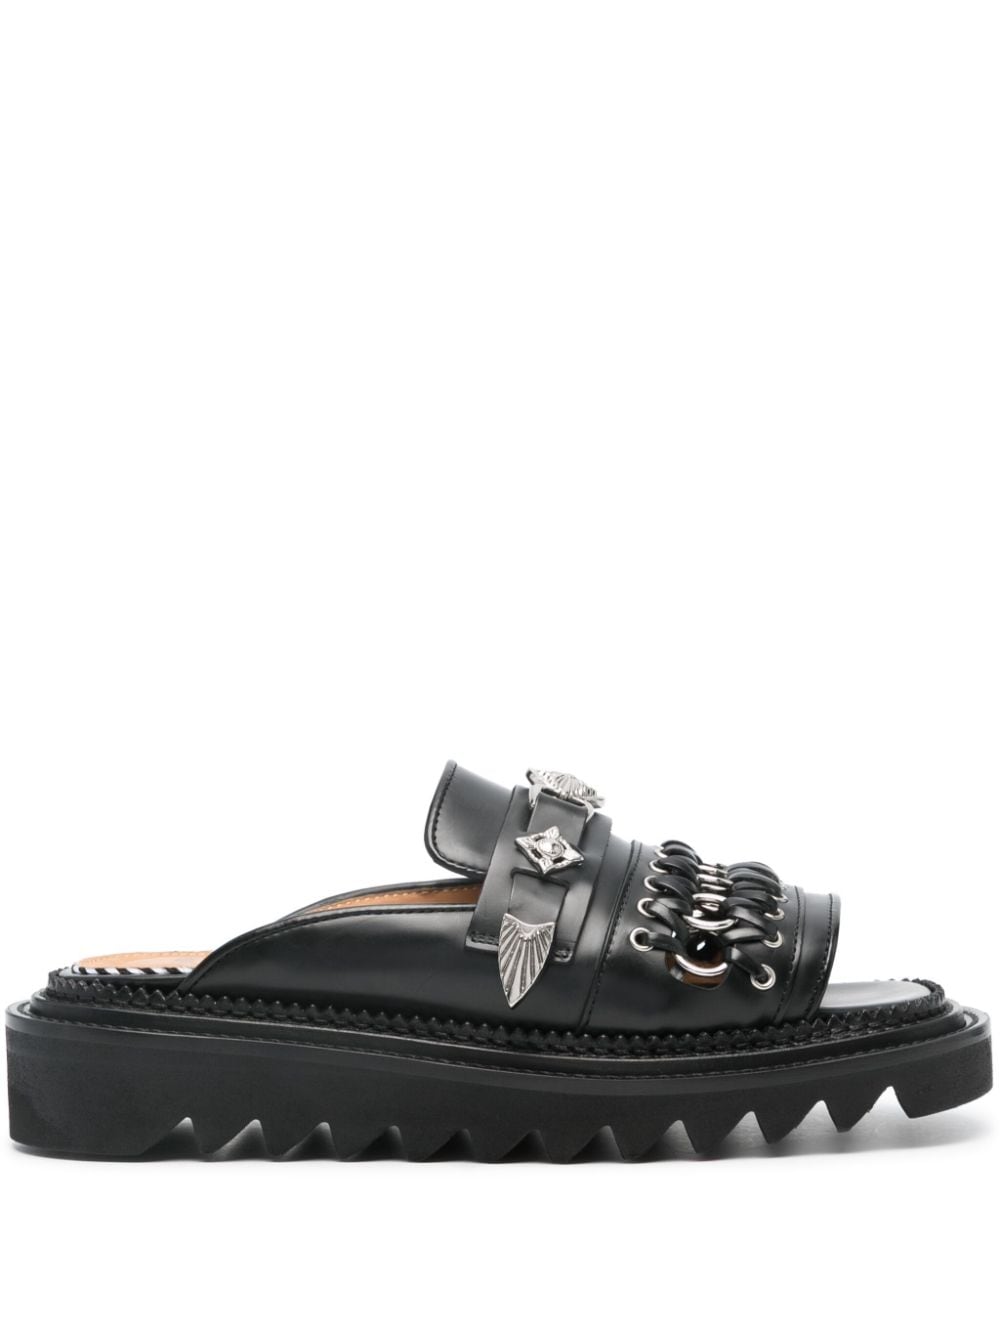 Toga Pulla stud-embellished leather sandals - Black von Toga Pulla